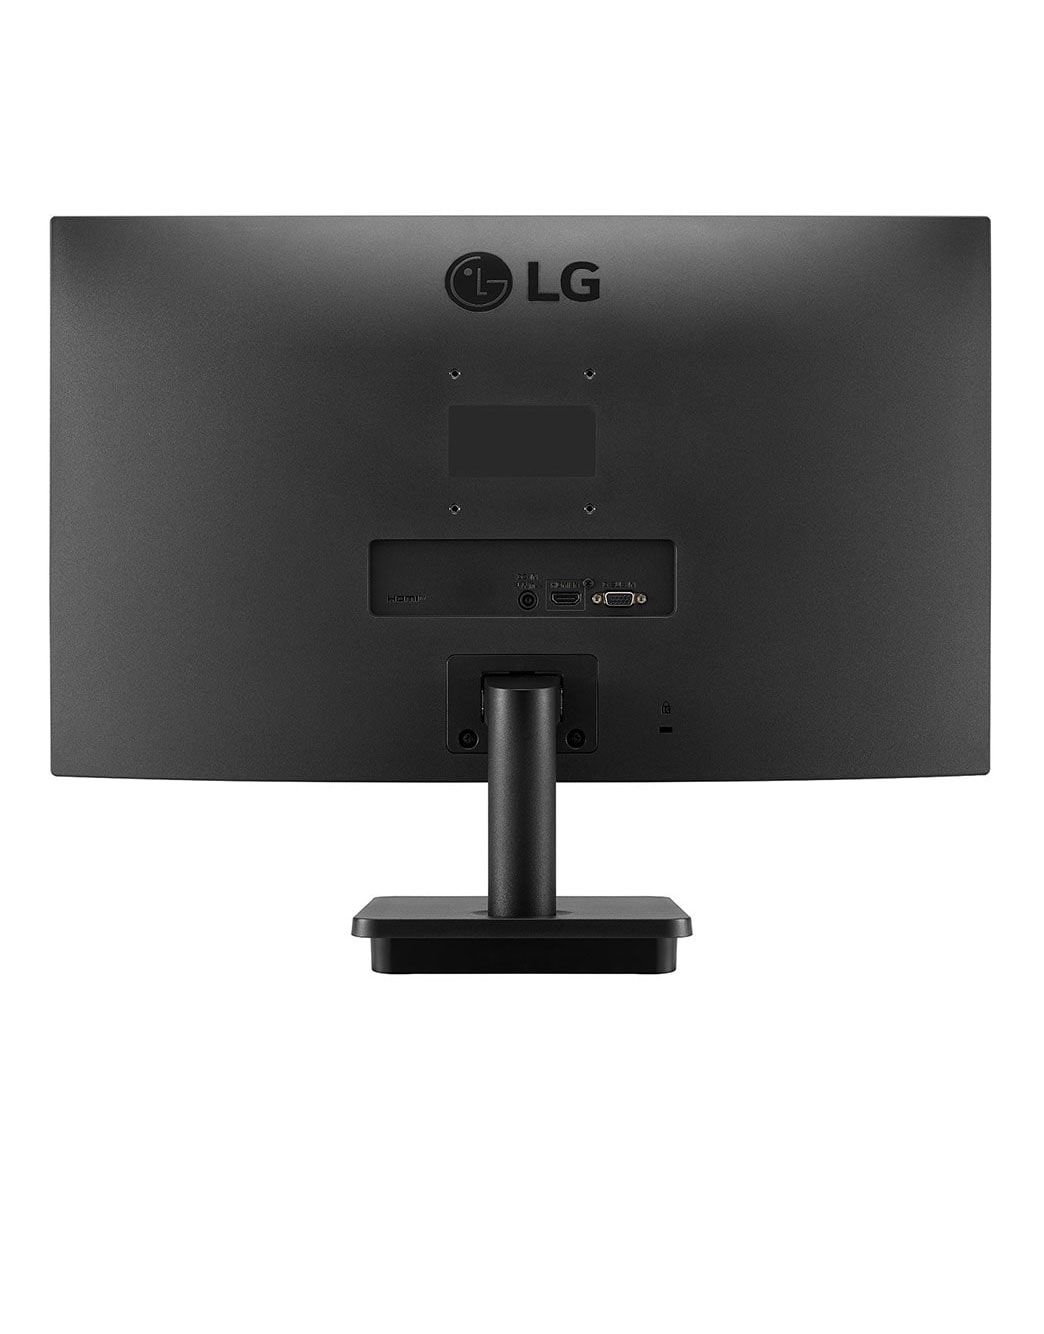 LG 23.8'' IPS Full HD Monitor with 3-Side Virtually Borderless